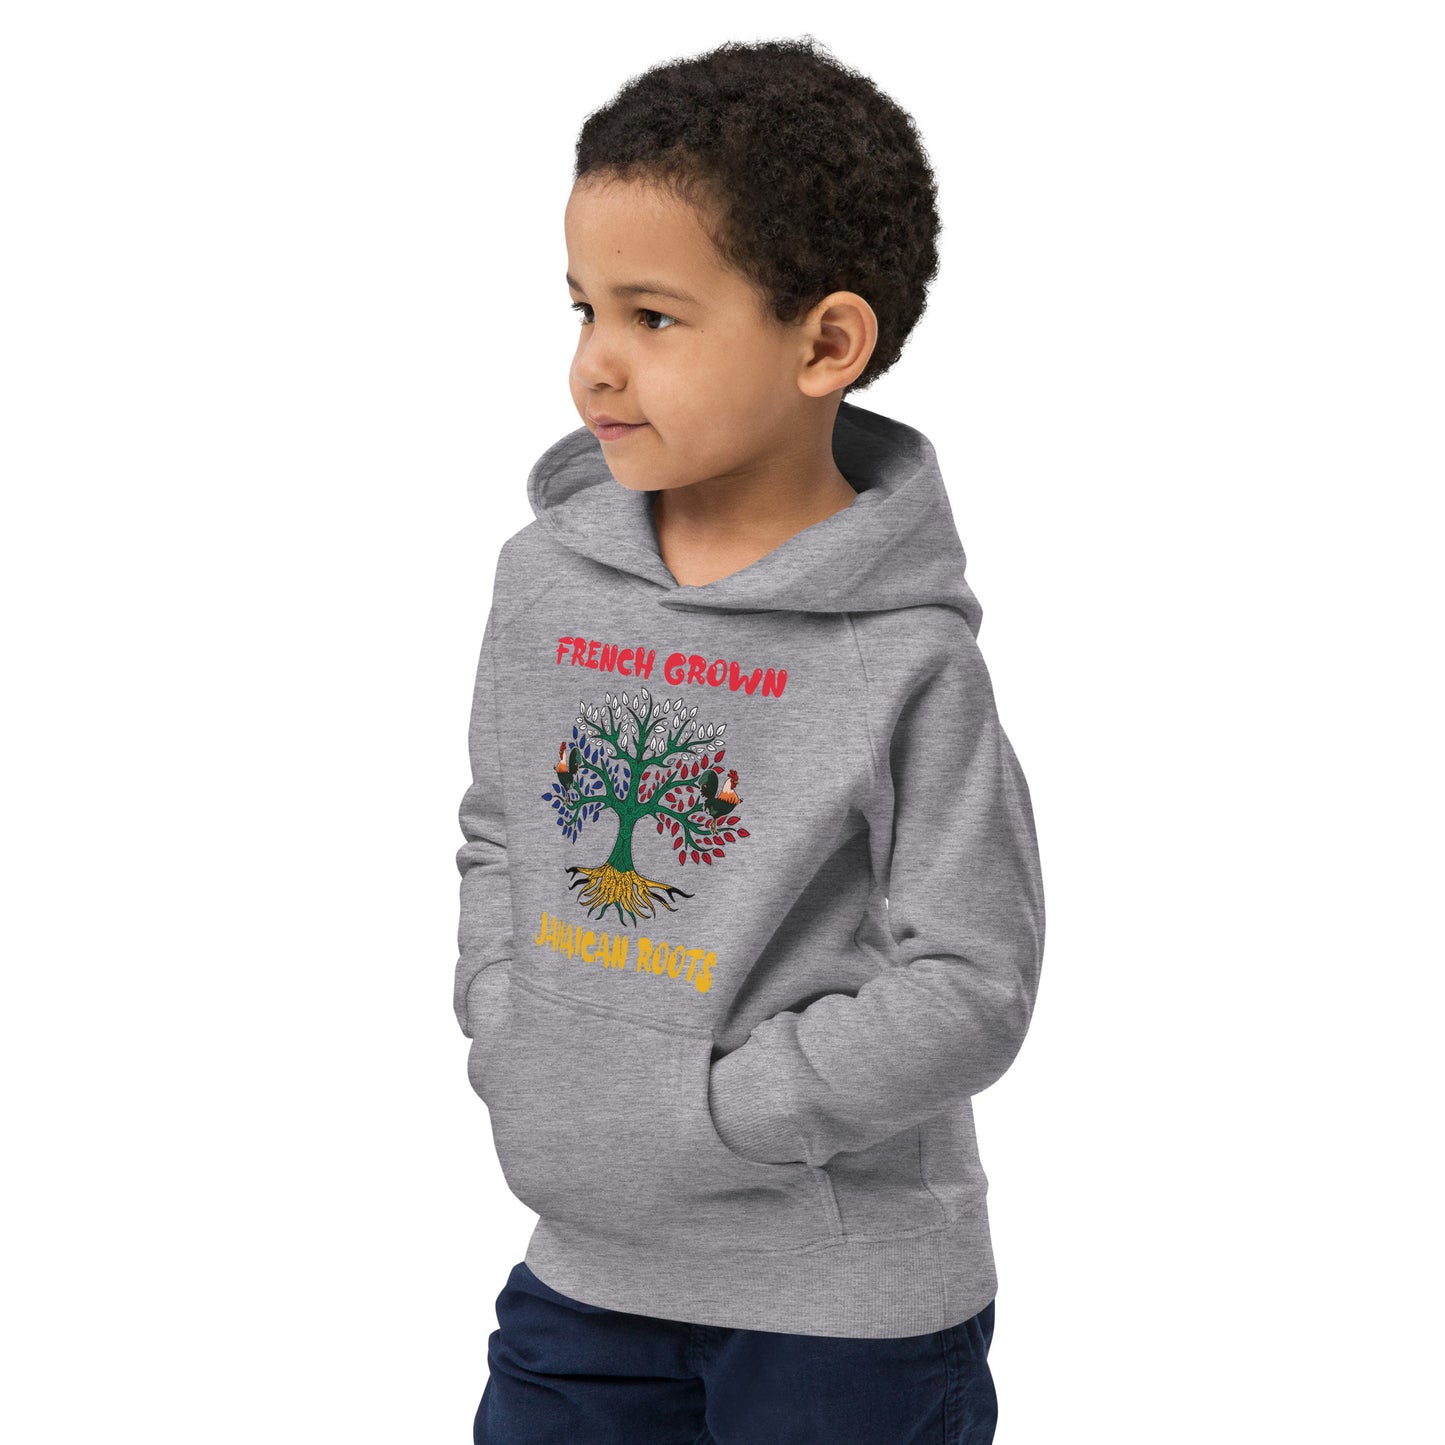 Kids eco "French Grown" hoodie